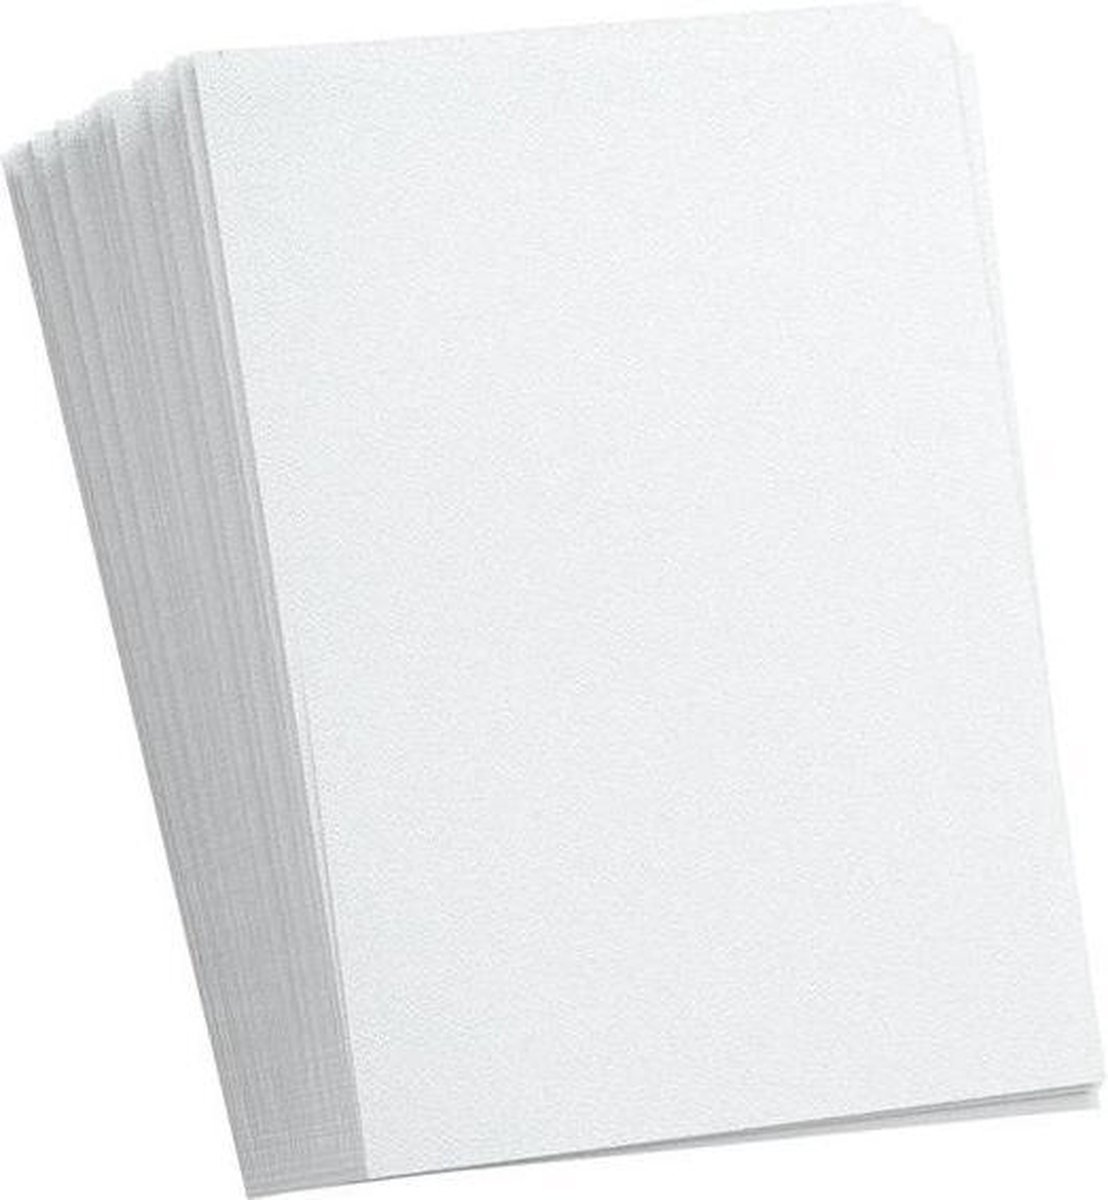 TCG Prime Sleeves 66 x 91 mm - White (Standard Size/100 Stuks) SLEEVES